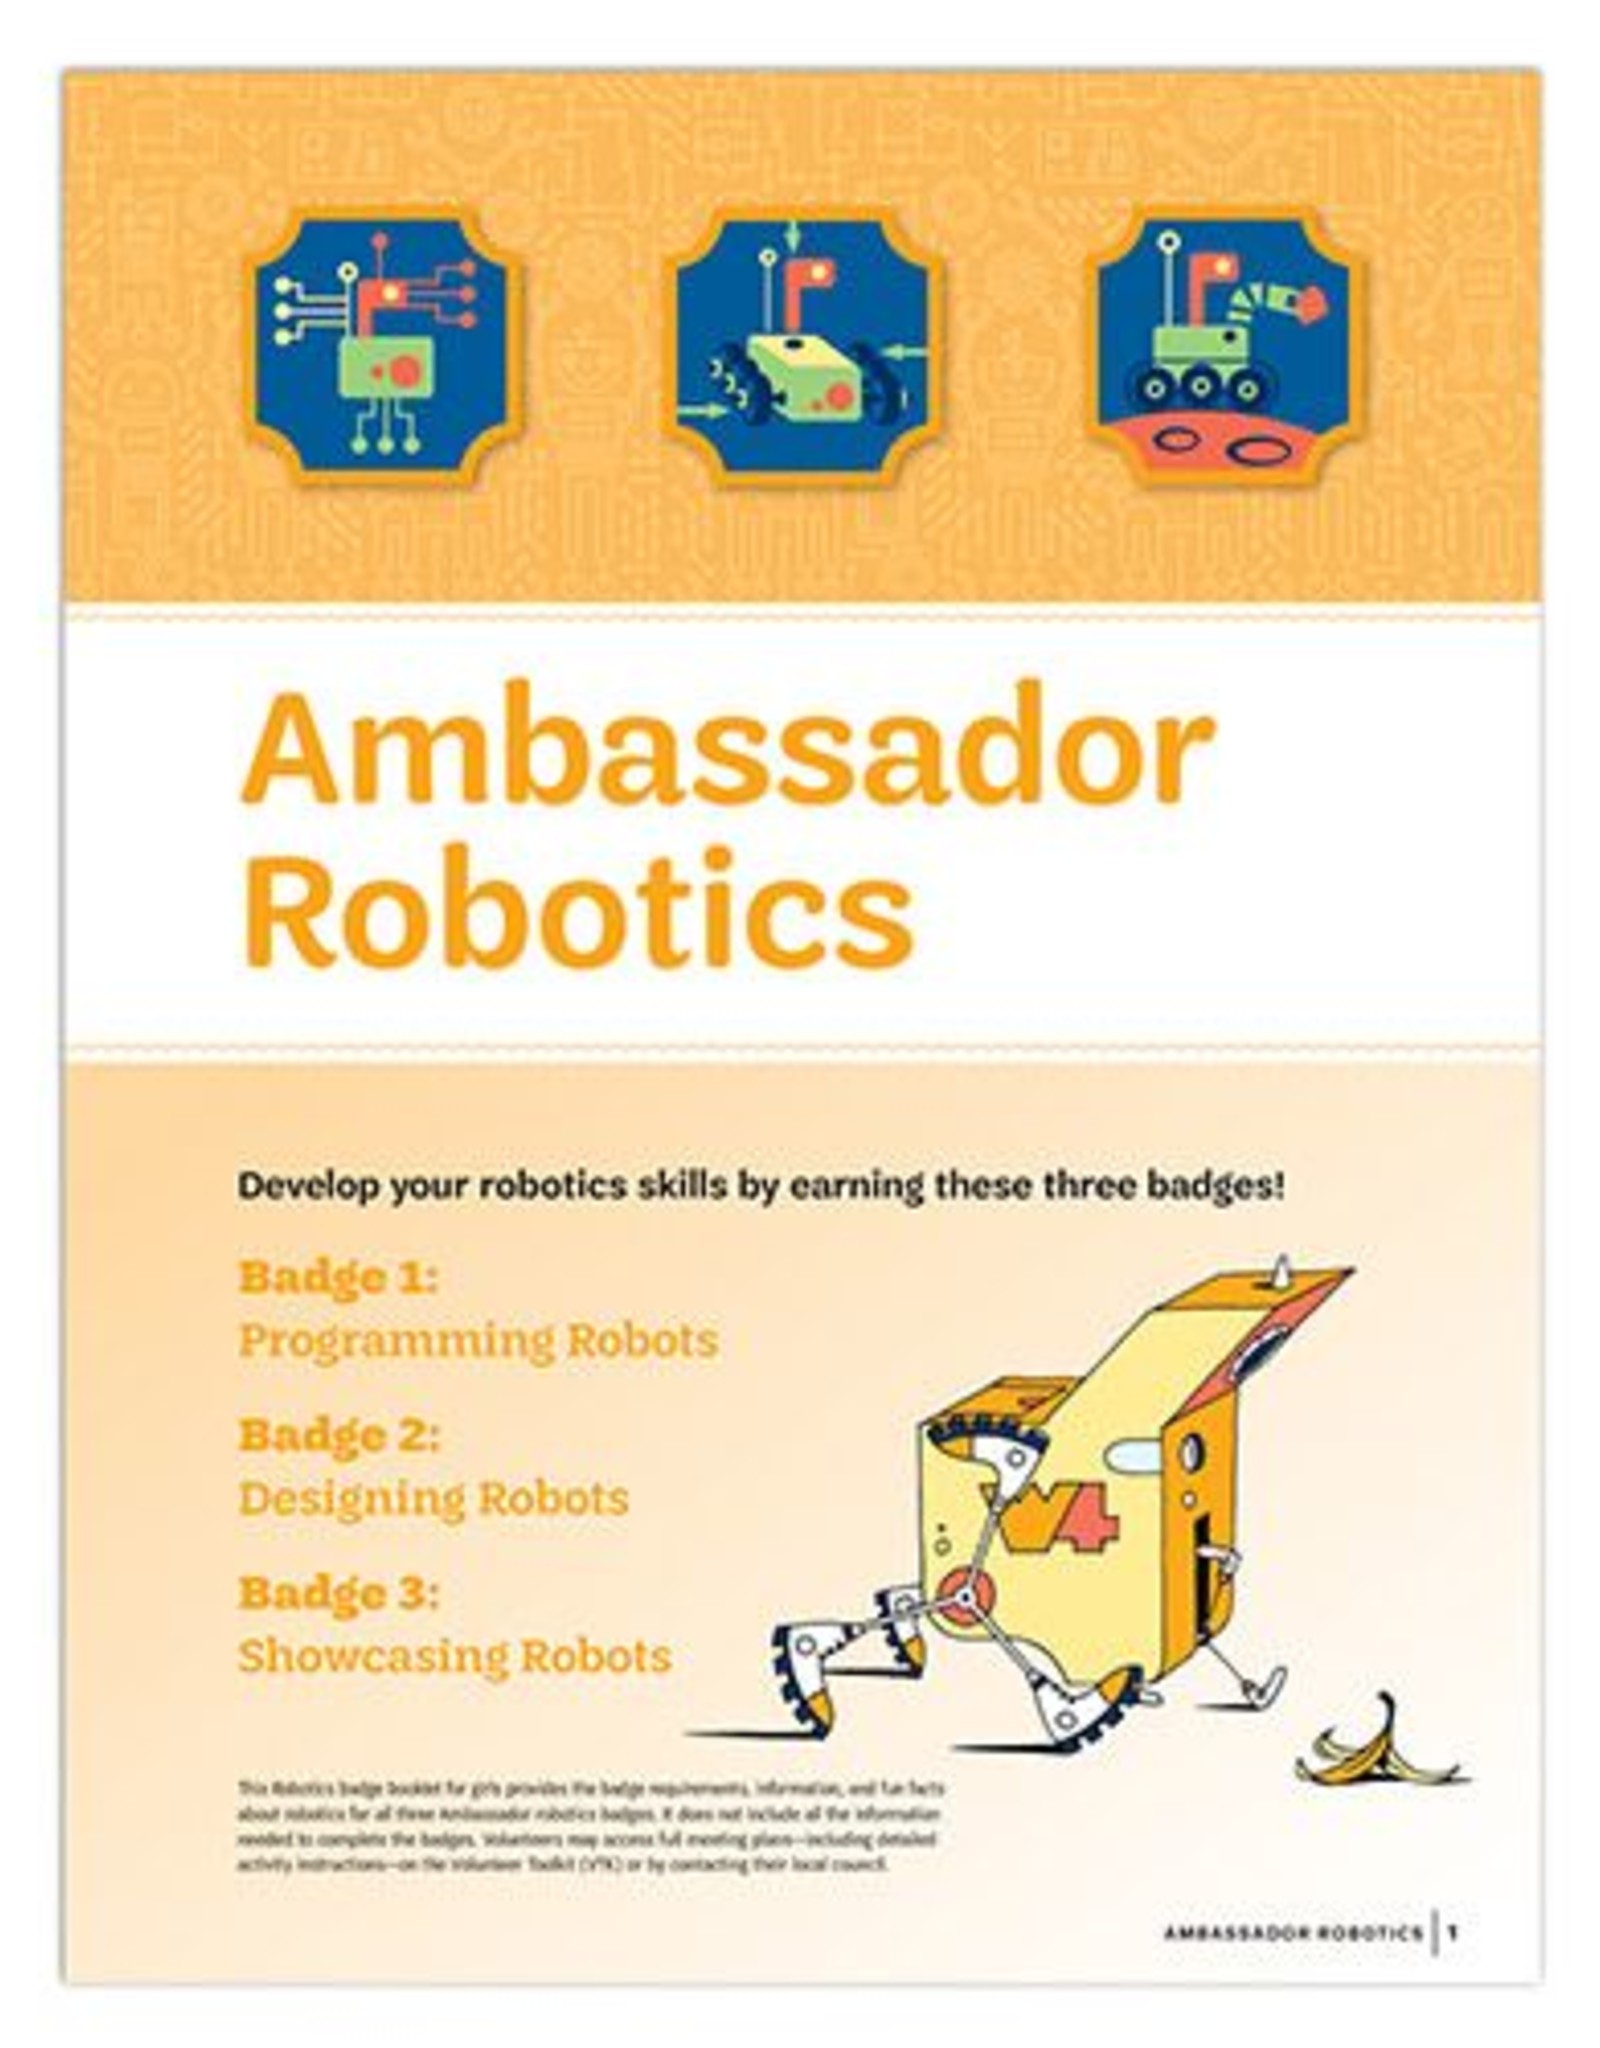 GIRL SCOUTS OF THE USA Ambassador Robotics Requirements